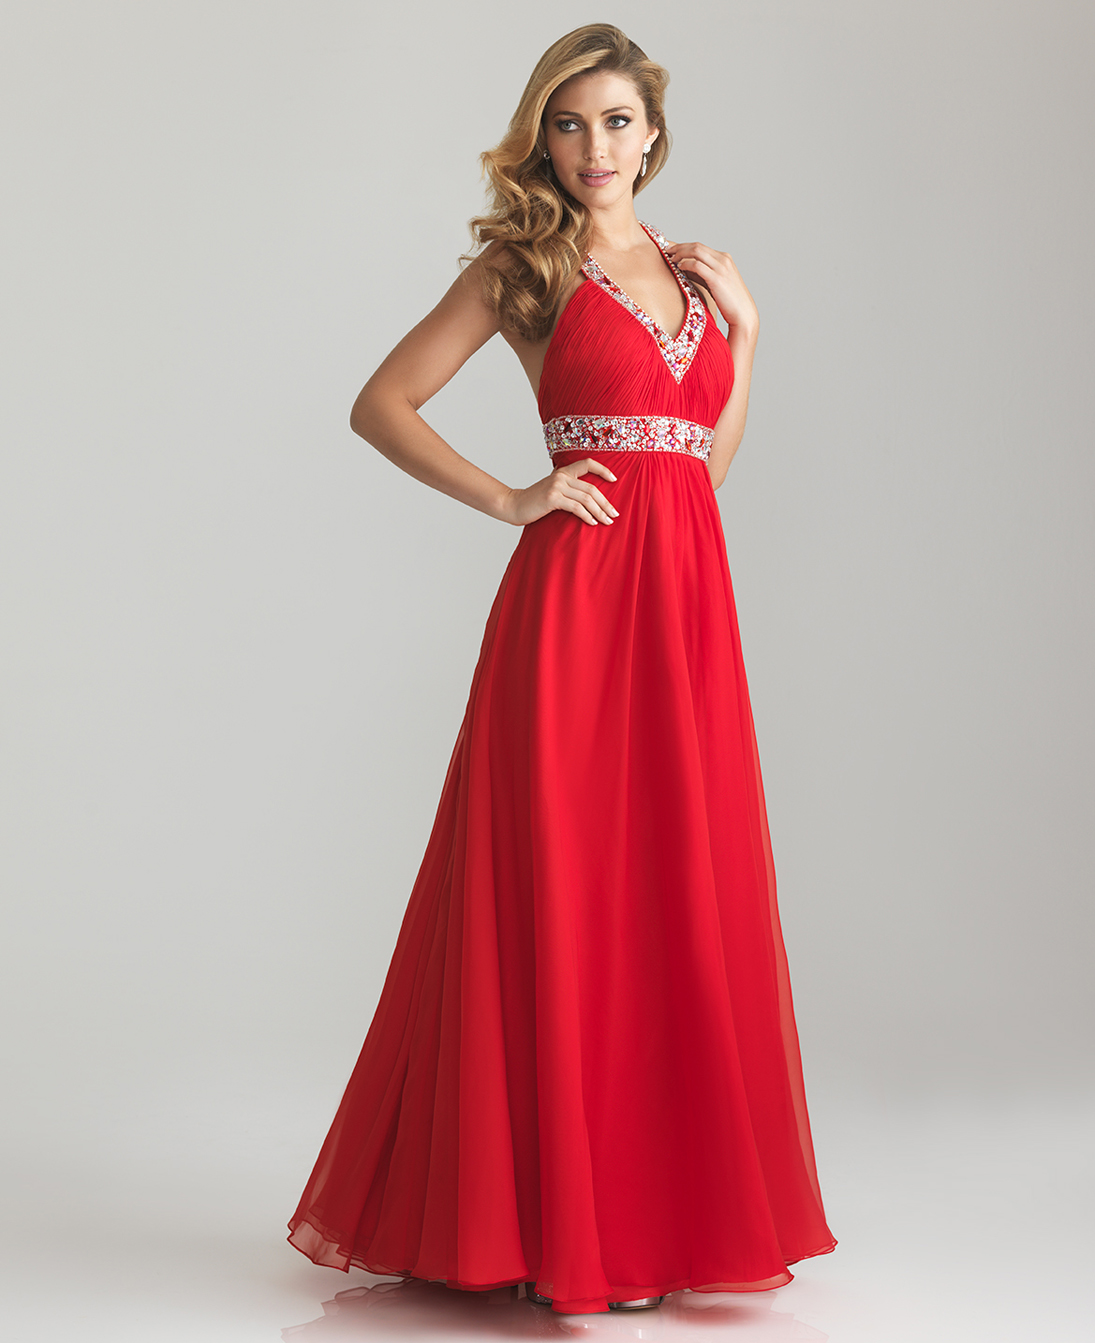 Red Chiffon Beaded Empire Waist Halter Dress Happy Sexy Red Prom Dresses Ideas